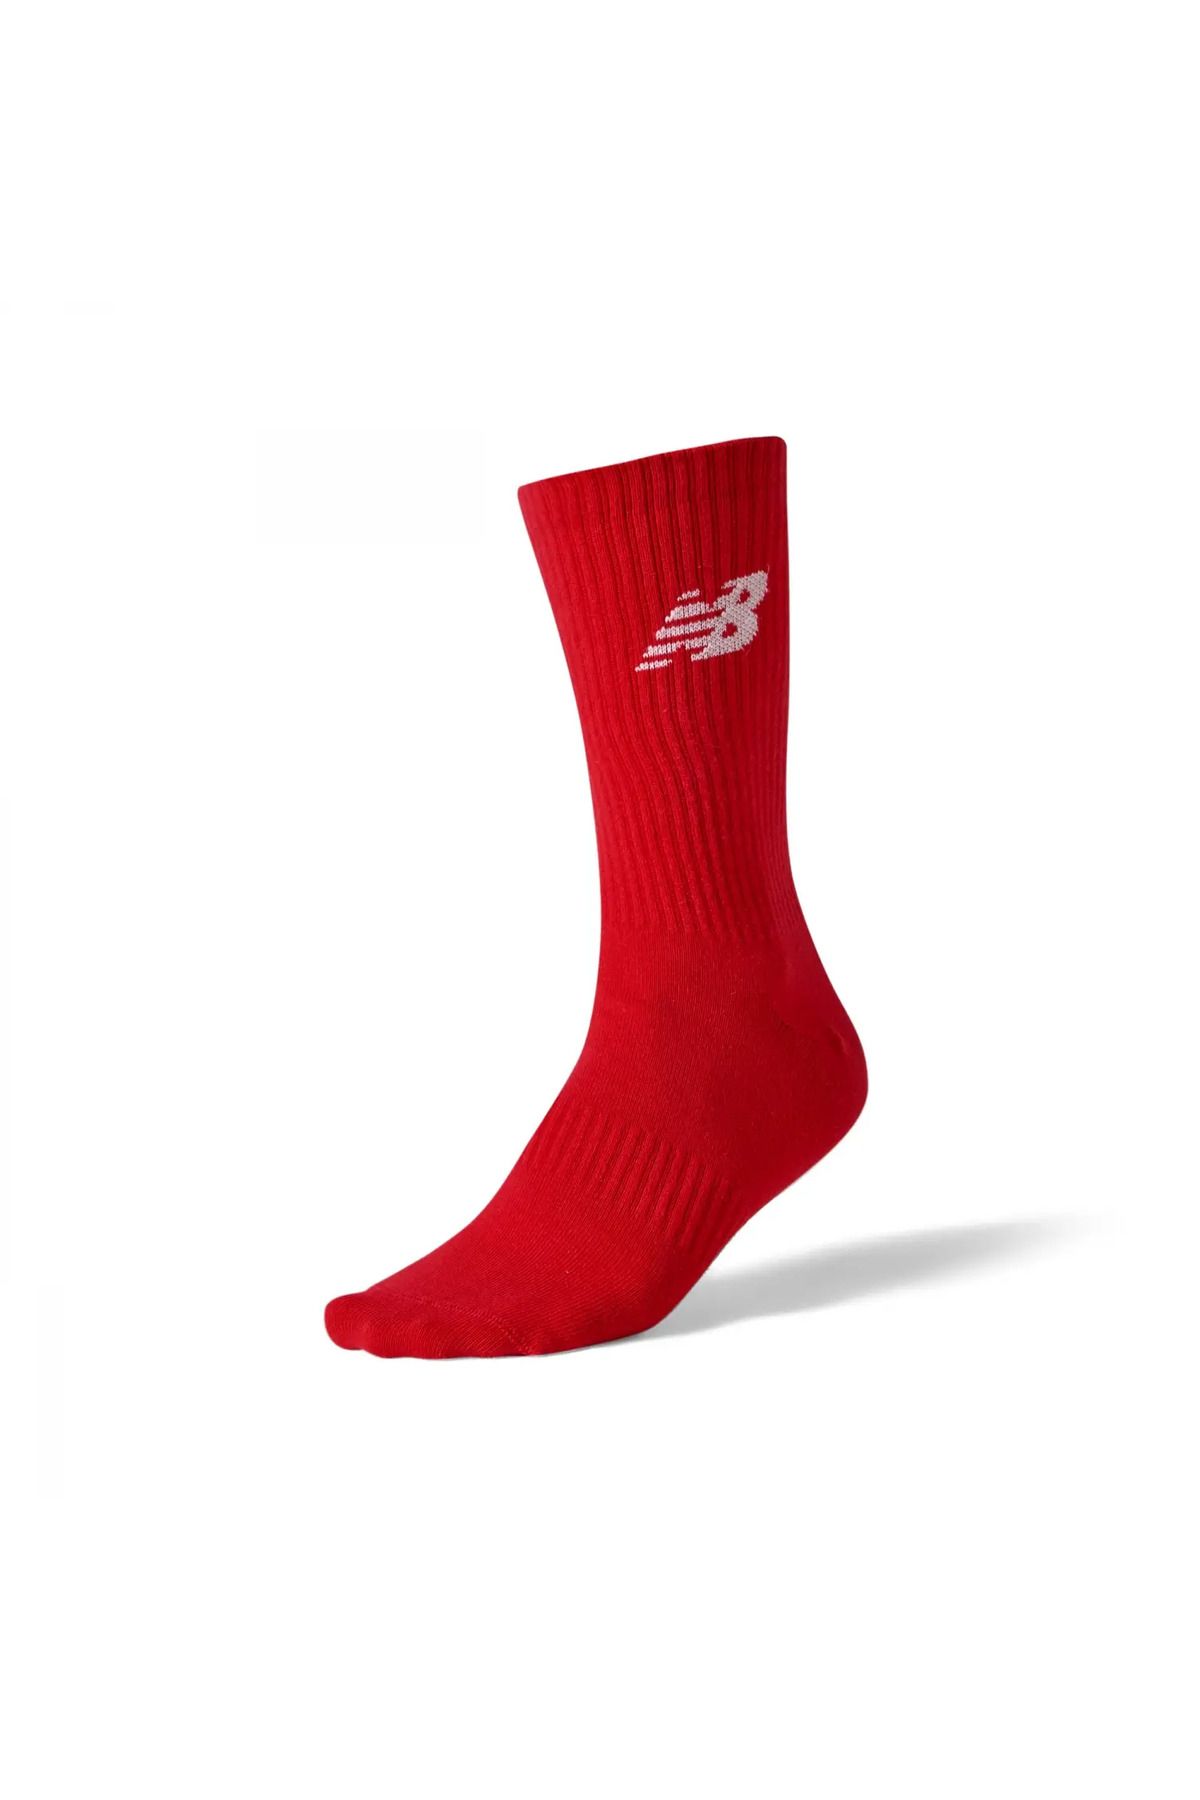 New Balance Kırmızı Unisex Çorap Ans3206-chr